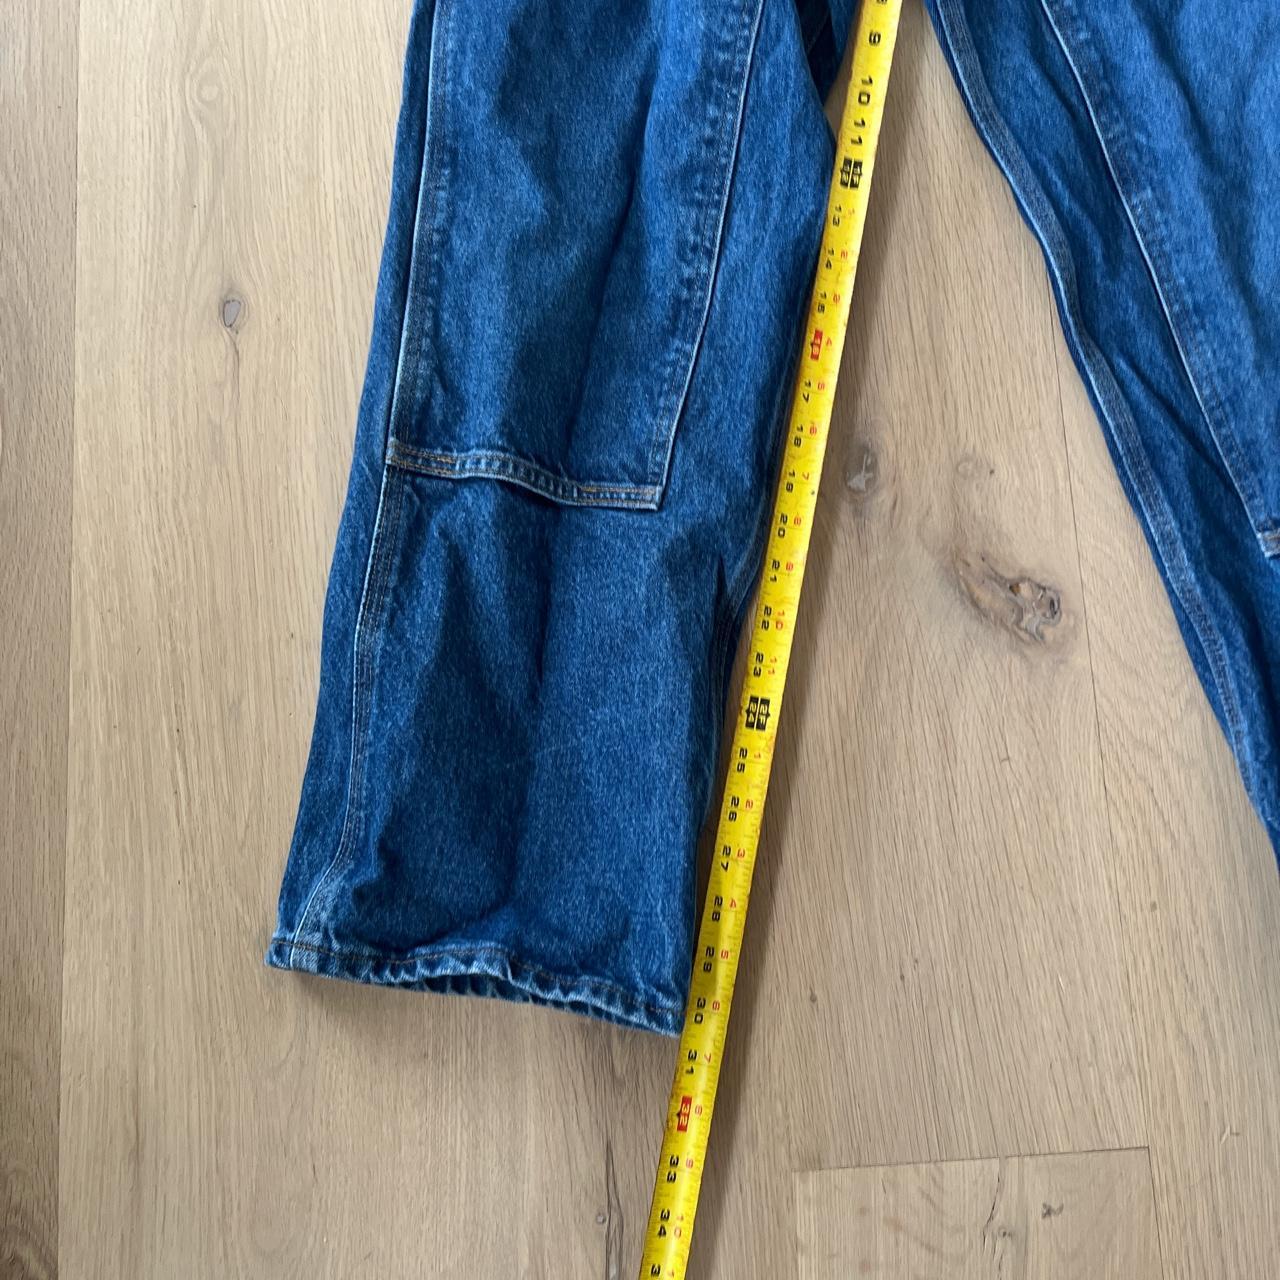 Carhartt Jeans 32x32 measurements shown in... - Depop